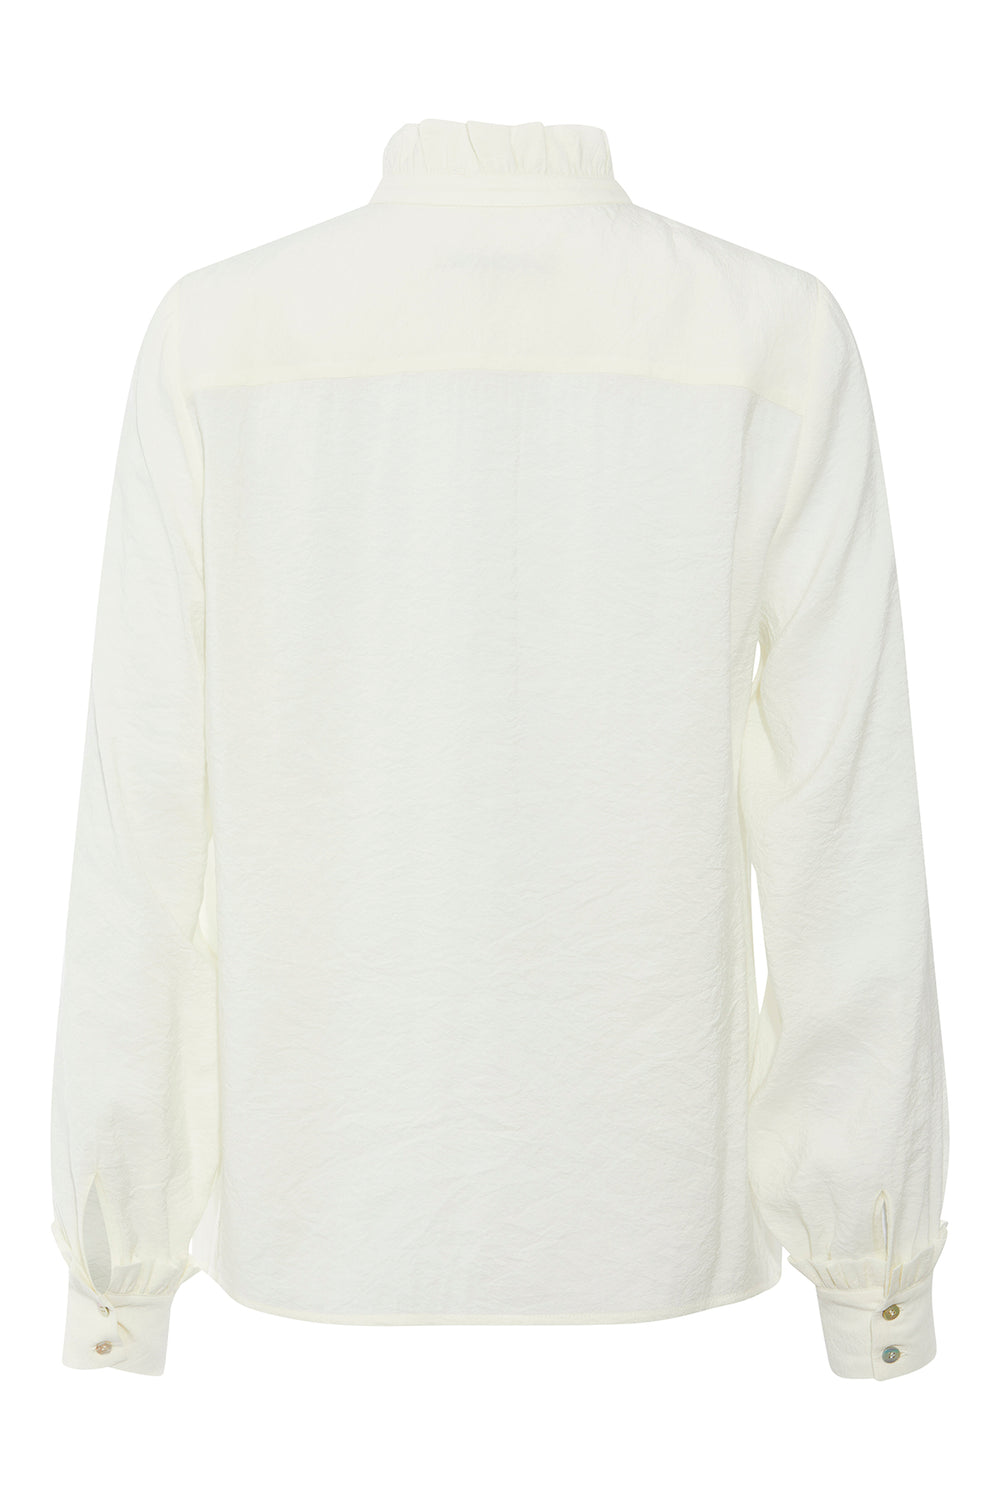 PBO Loon skjorte SHIRTS 101 Star white